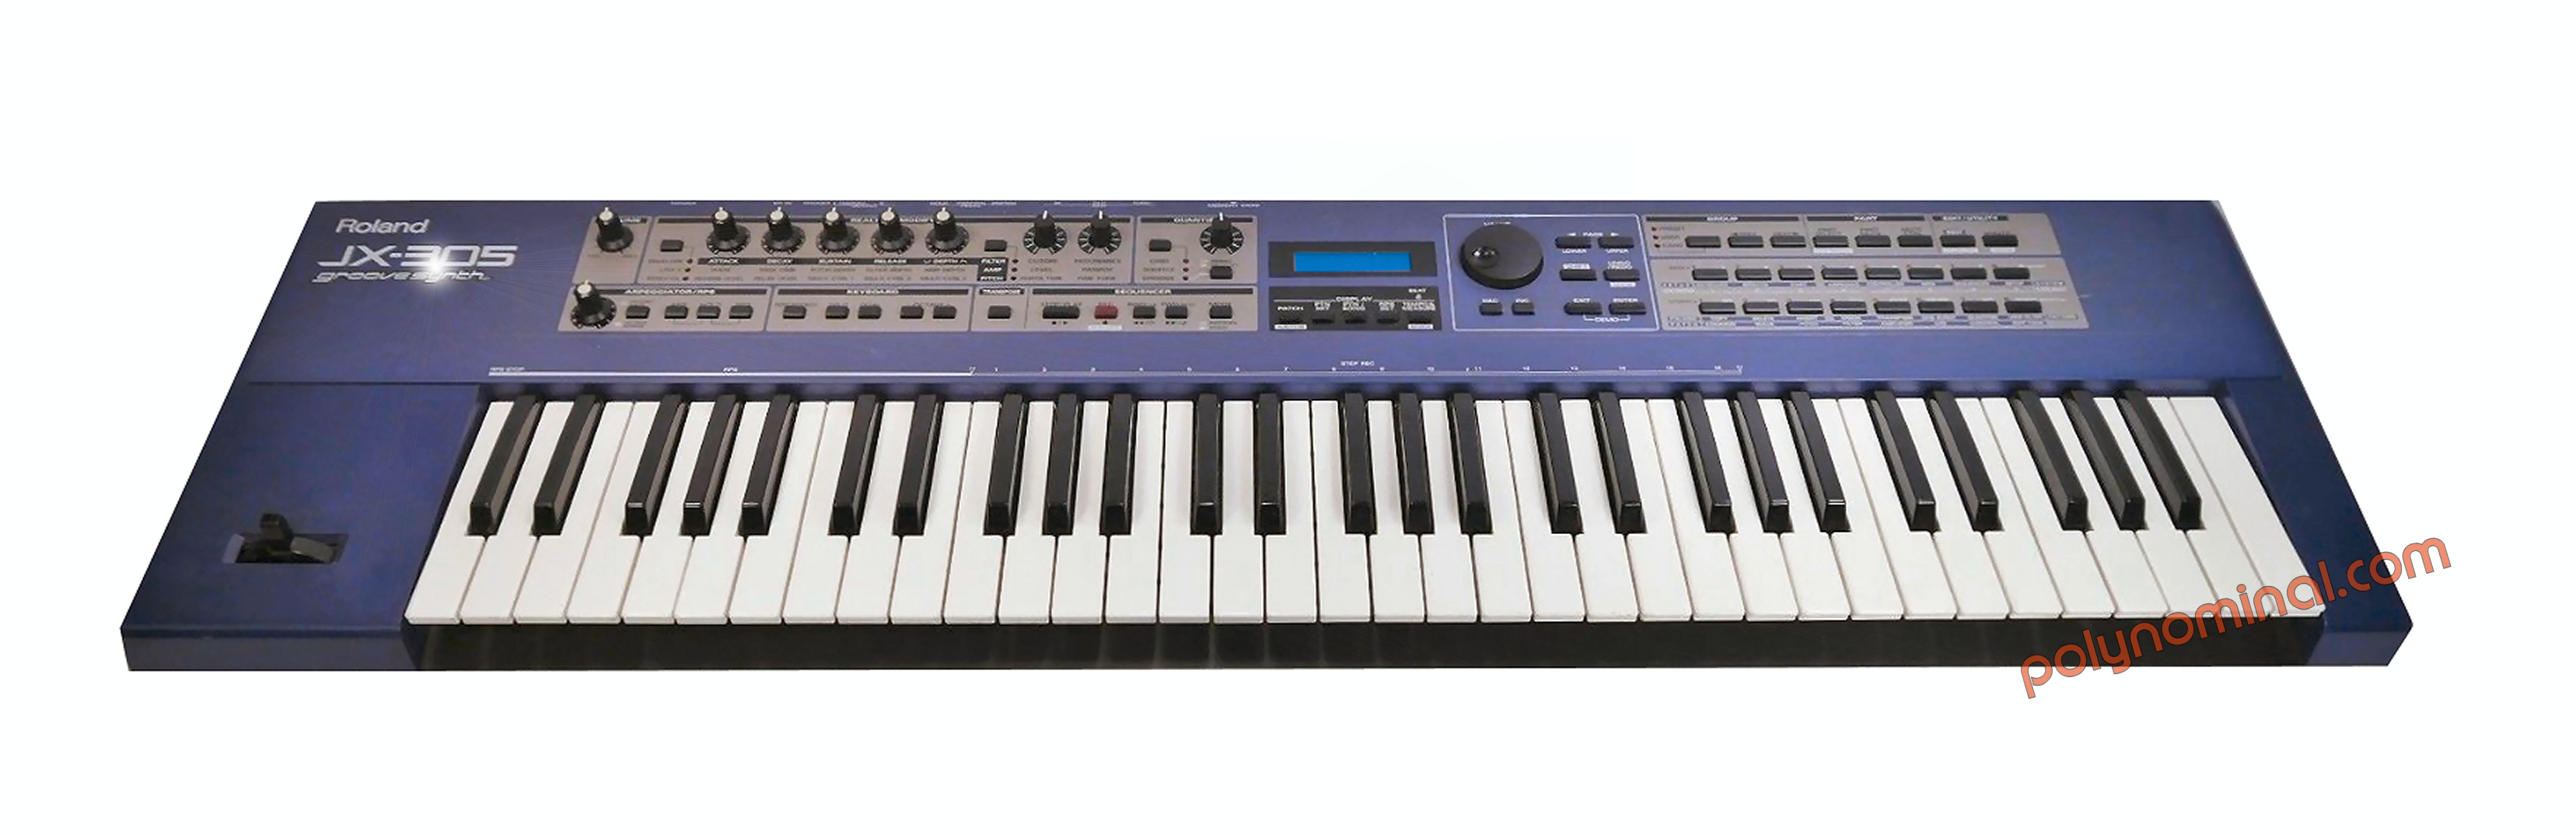 ROLAND JX-305 シンセサイザー - 鍵盤楽器